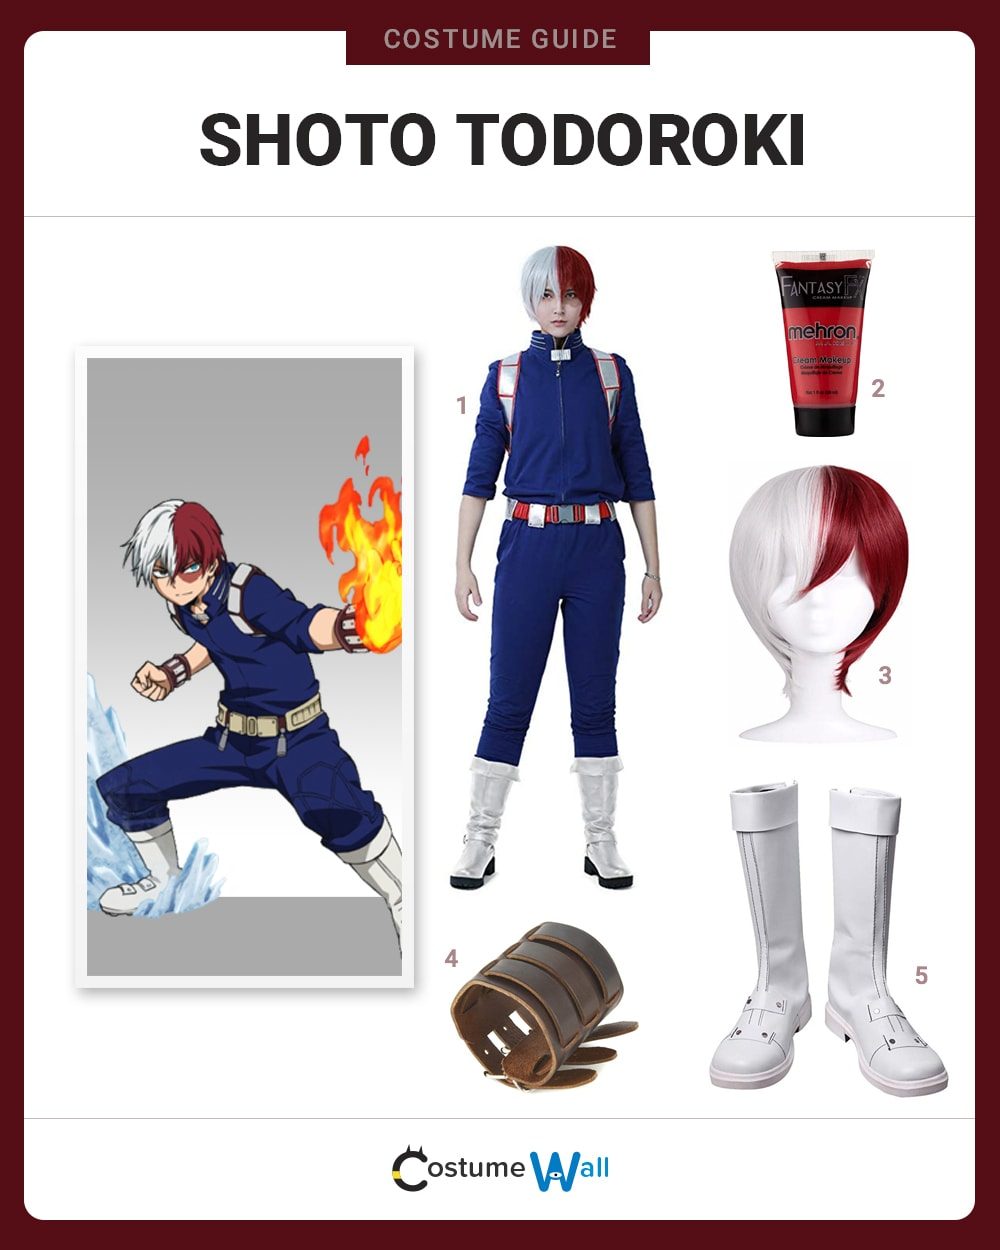 Shoto Todoroki Costume Guide